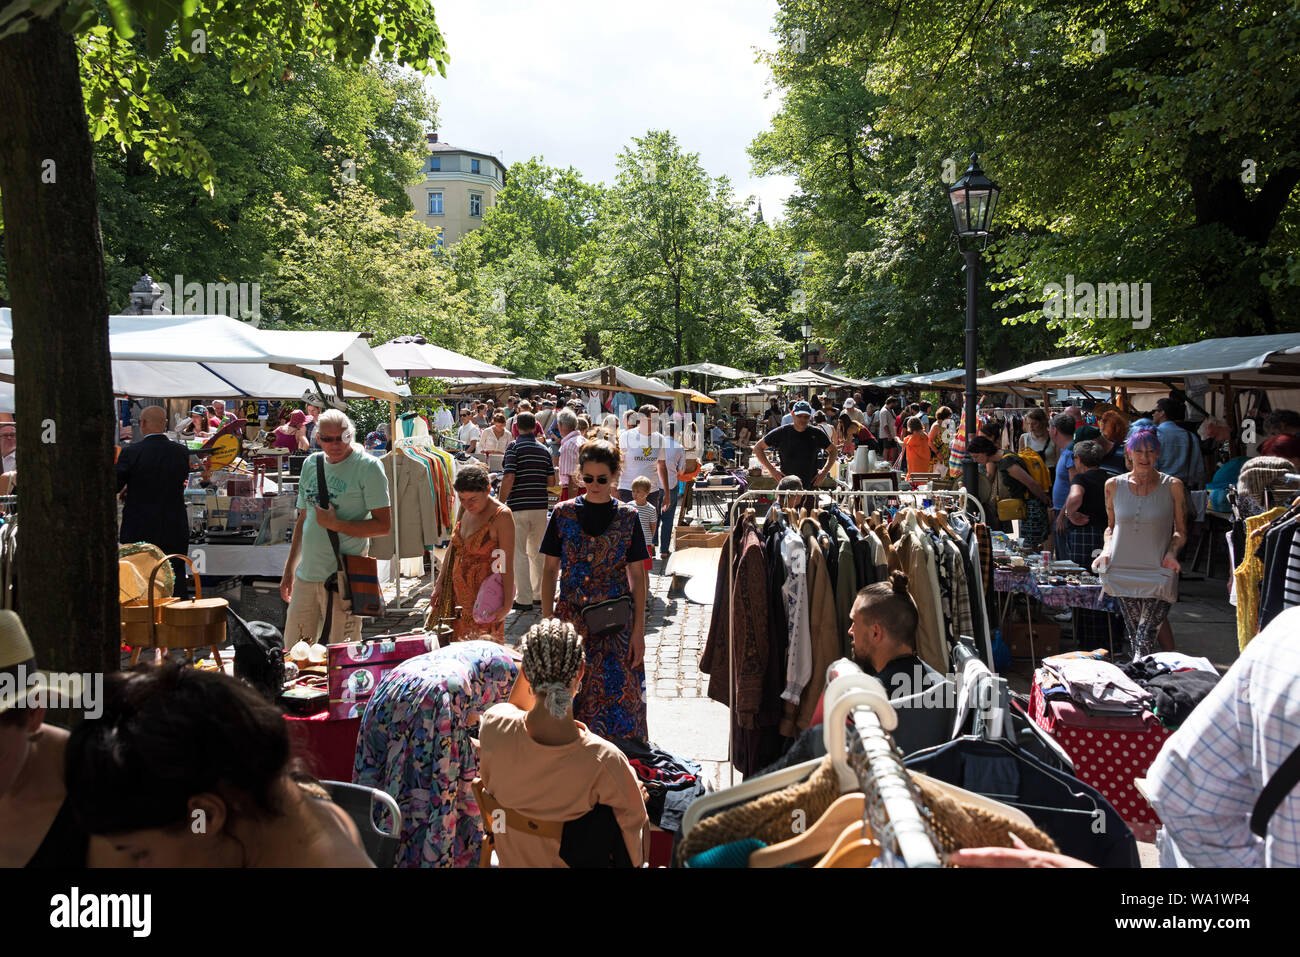 Sunday shoppers crowding the Arkonaplatz flea market, Berlin, Germany ...